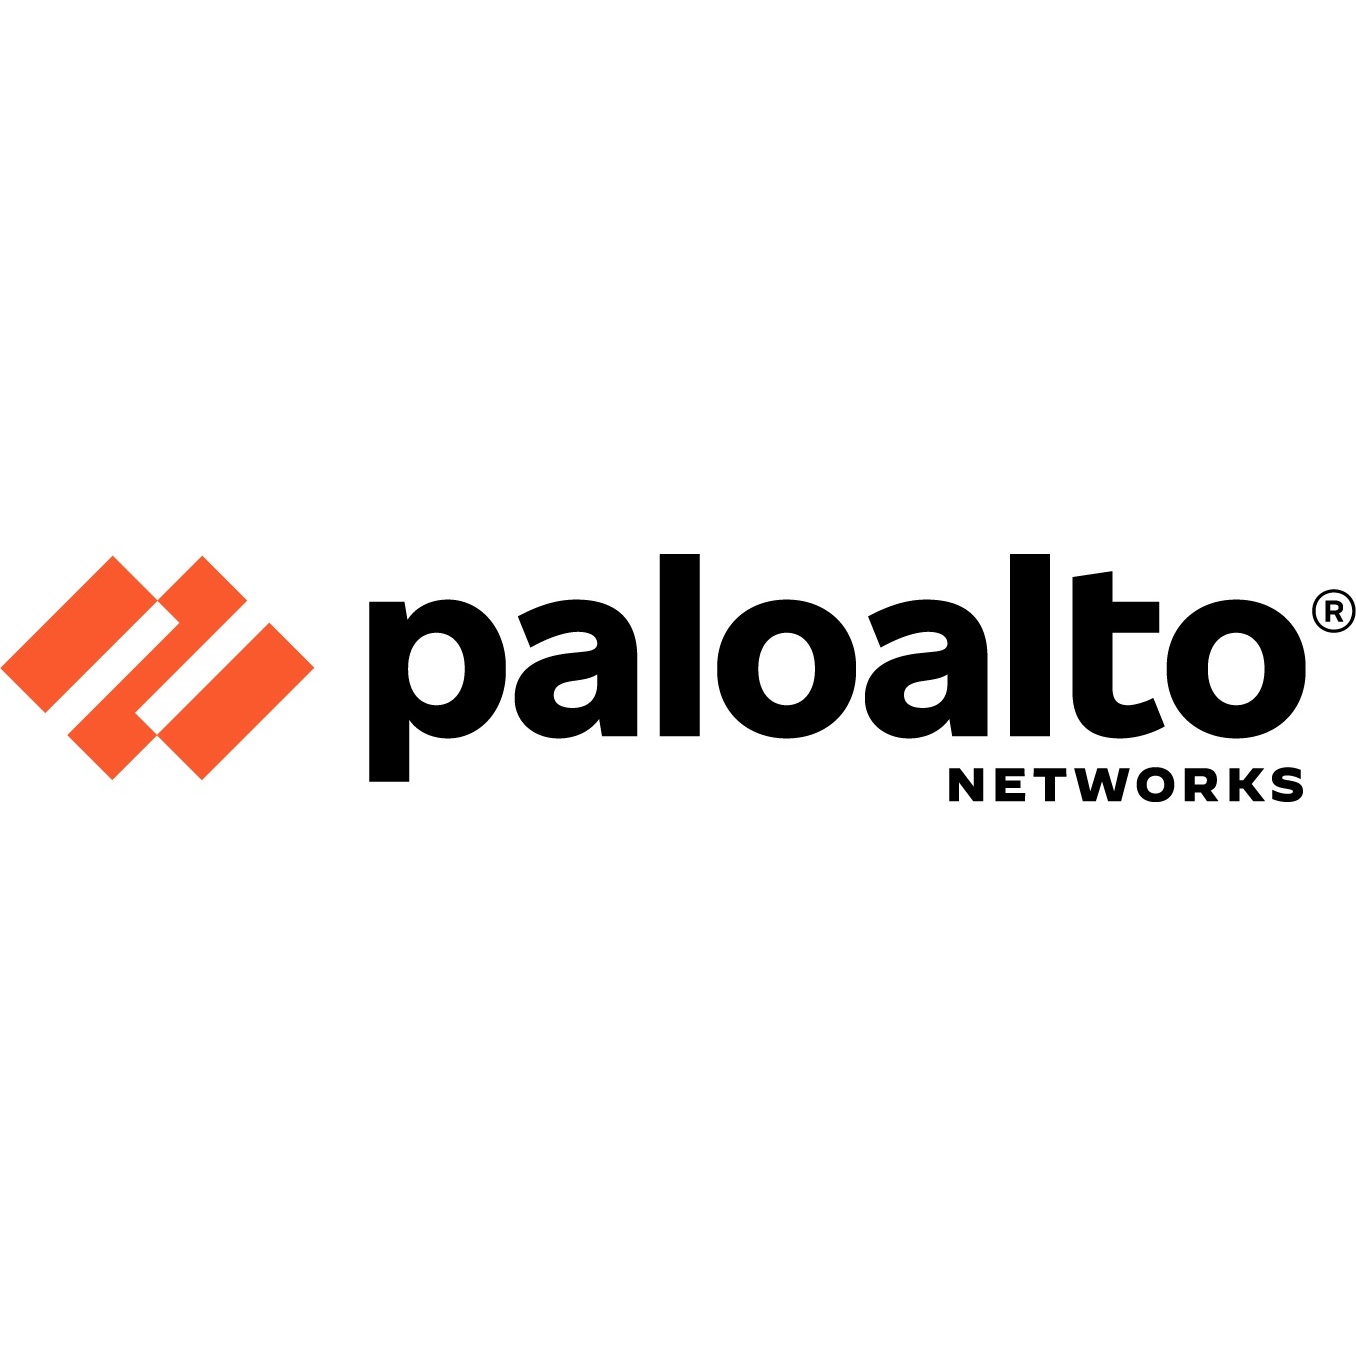 palo alto networks ipo price